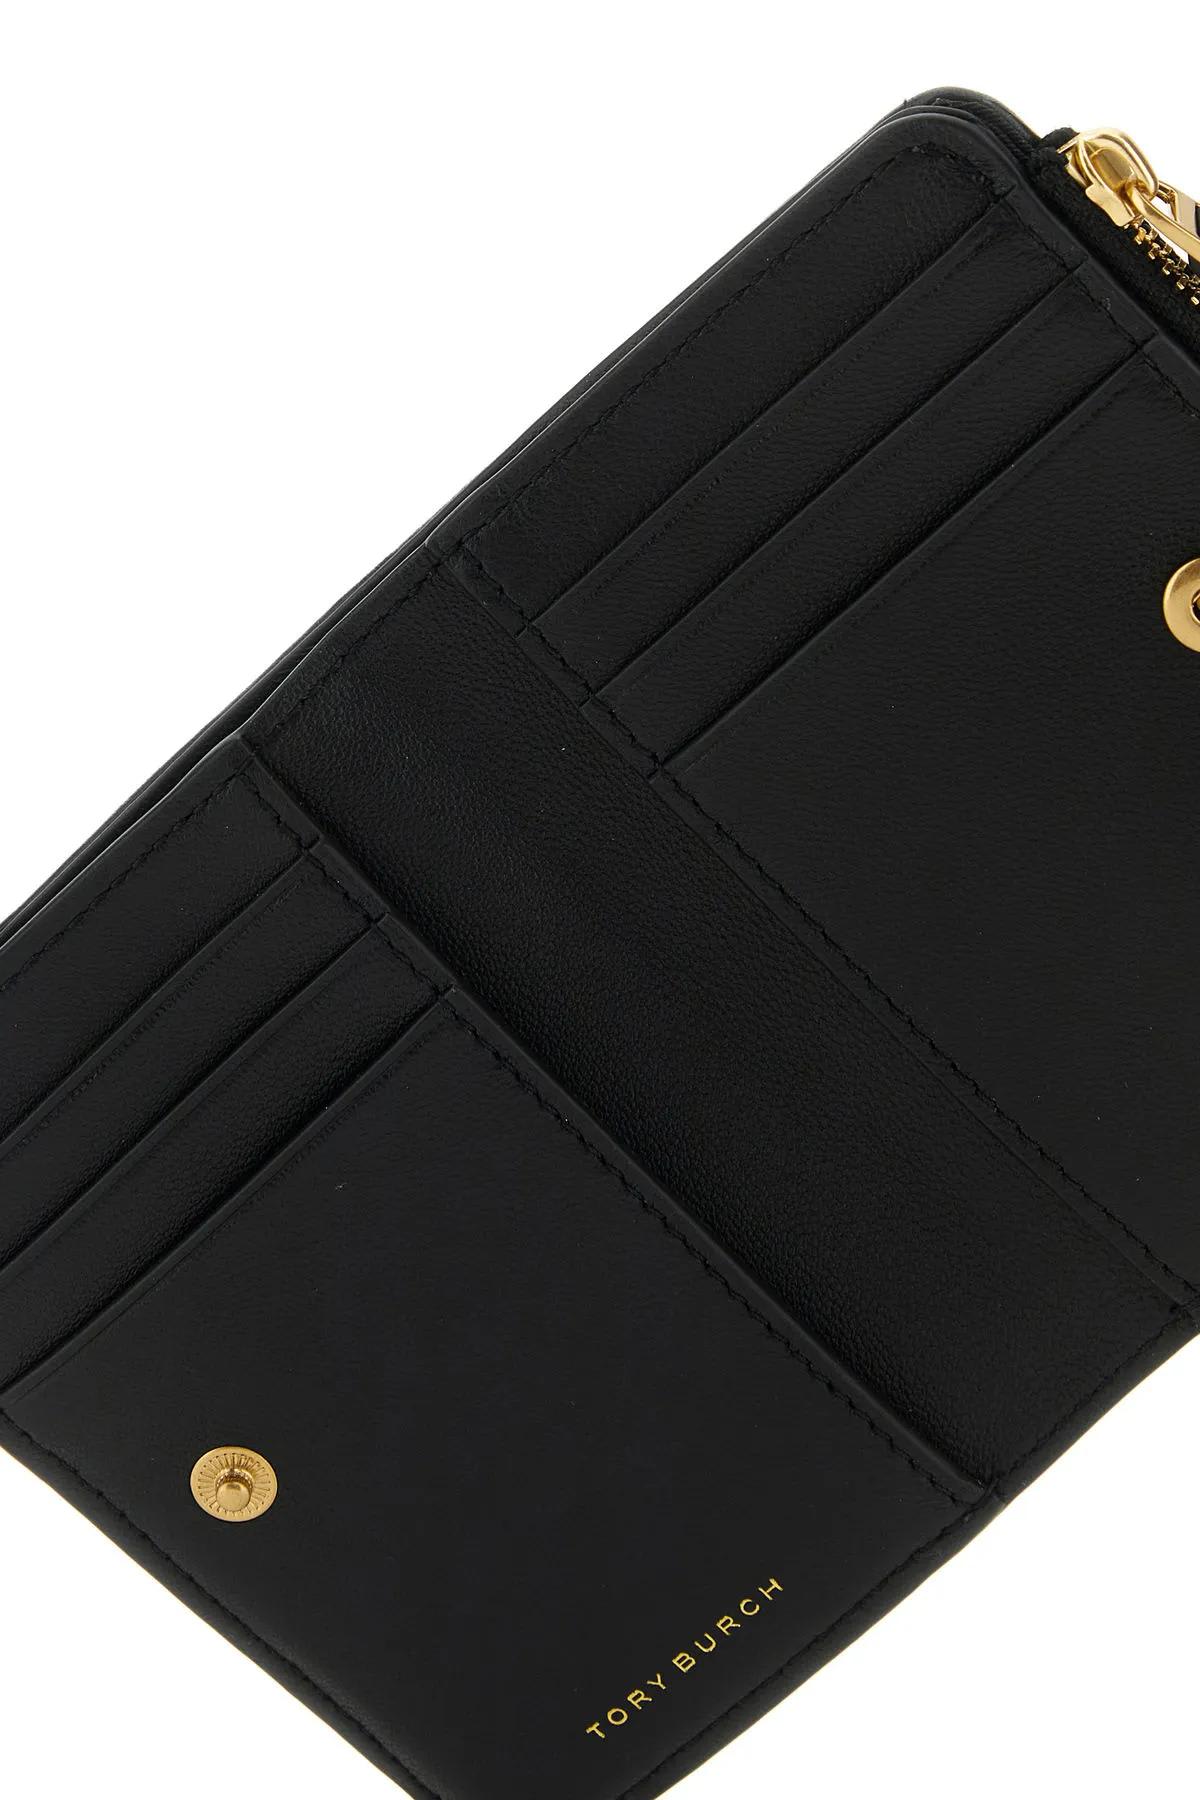 Shop Tory Burch Black Leather Kira Wallet